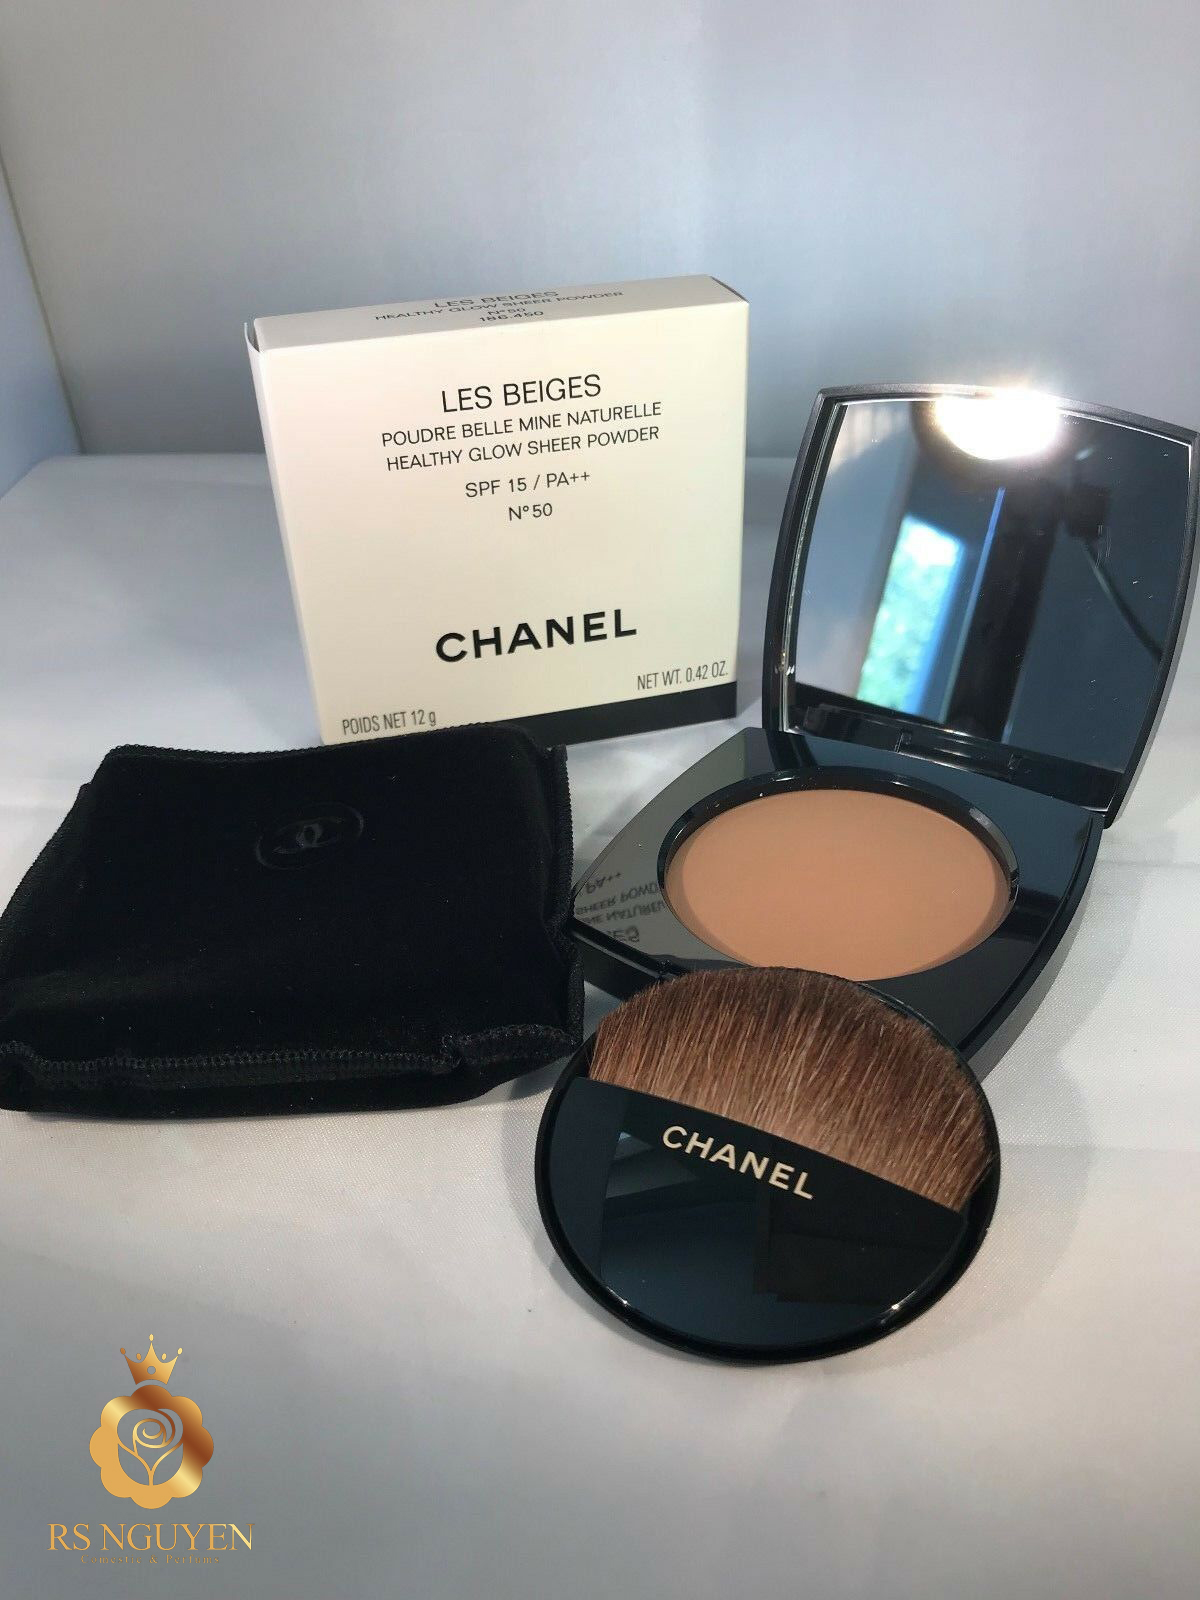 Chanel Les Beiges Healthy Glow Sheer Powder in N*30